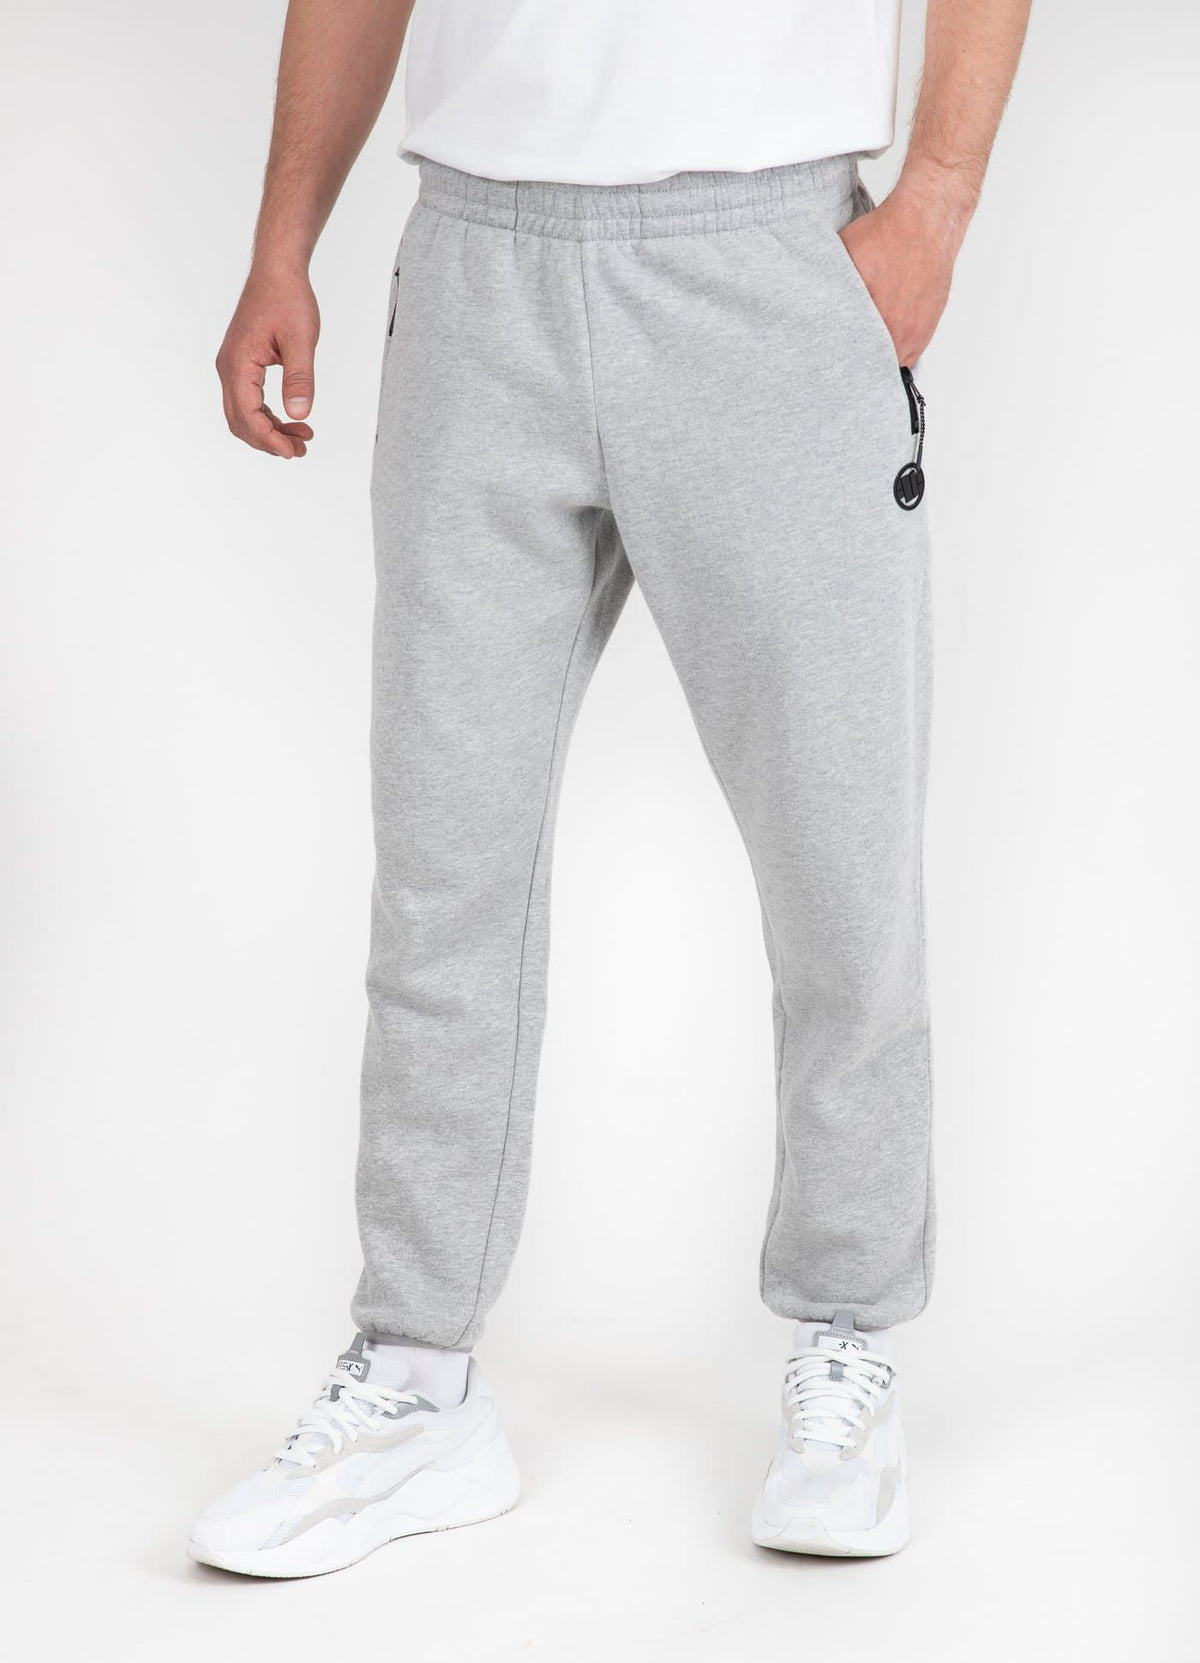 Track Pants ATHLETIC Grey - Pitbull West Coast International Store 